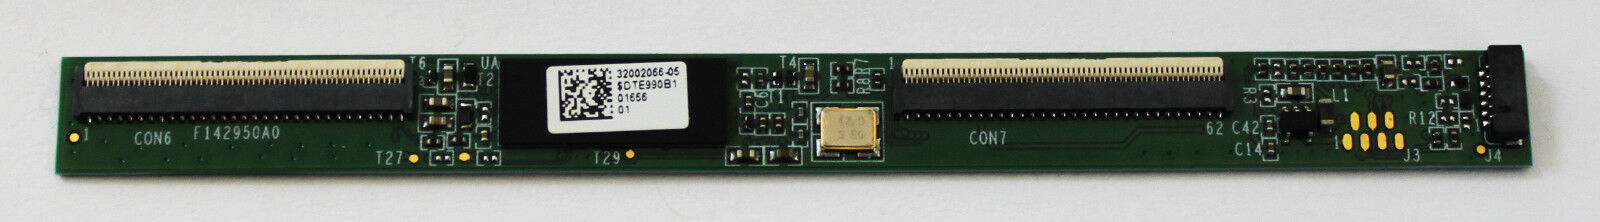 OEM ACER ASPIRE SWITCH 11 V SW5-173 ORIGINAL DIGITIZER CONTROLLER MICROPHONE PCB